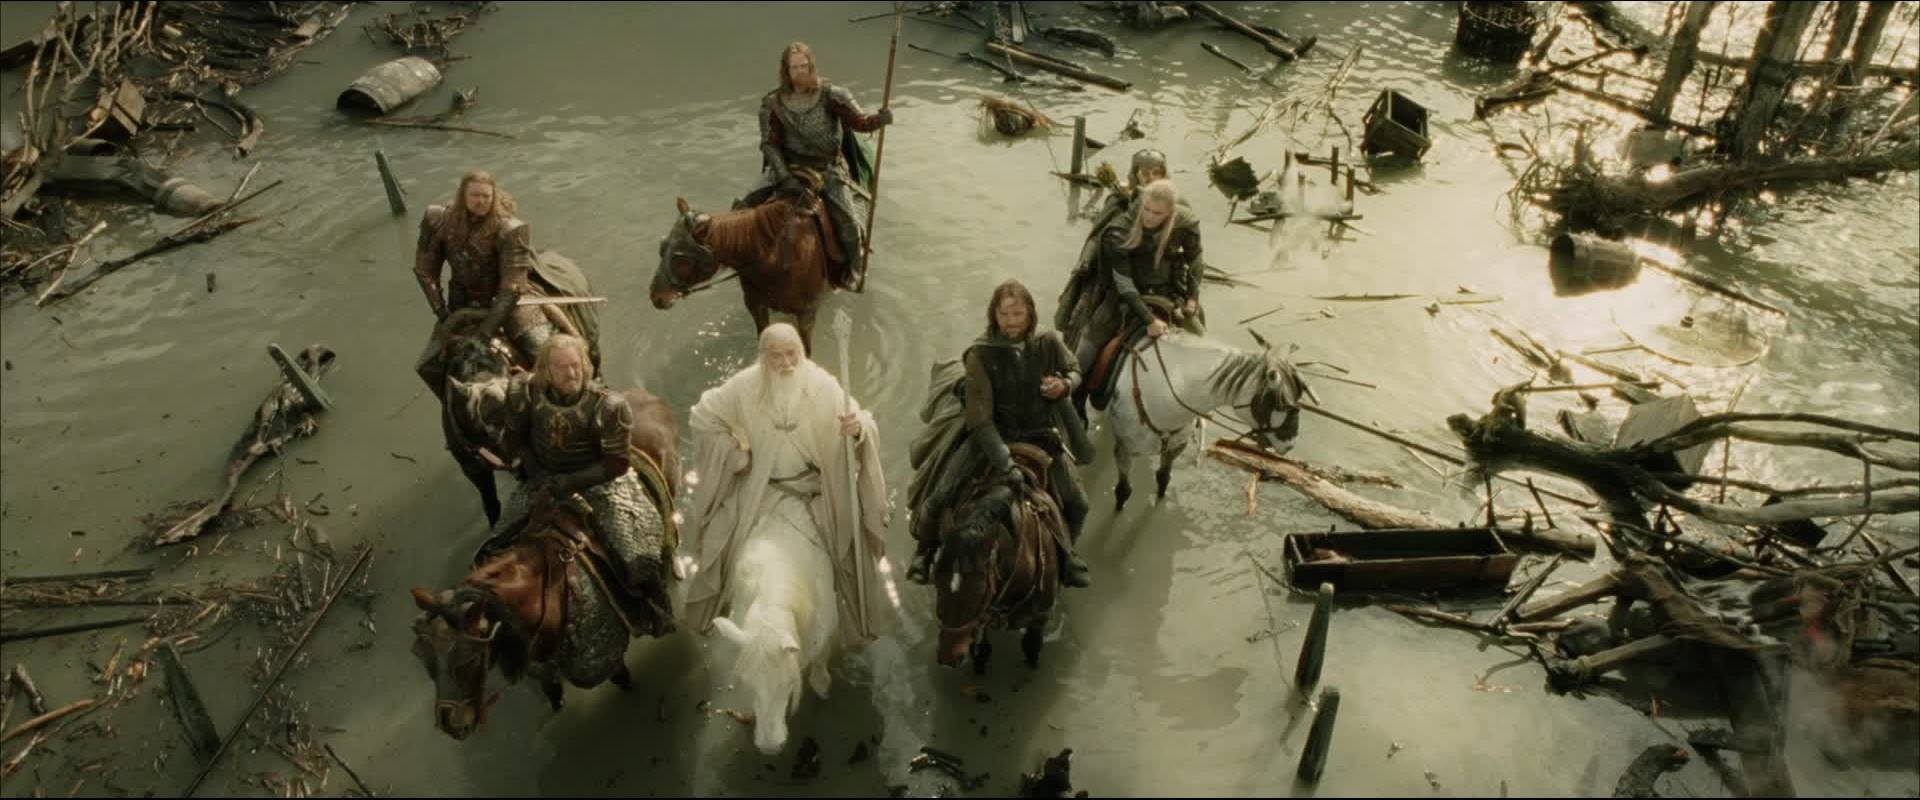 Viggo Mortensen, Ian McKellen, Orlando Bloom, Bernard Hill, John Rhys-Davies, and Karl Urban in The Lord of the Rings: The Return of the King (2003)